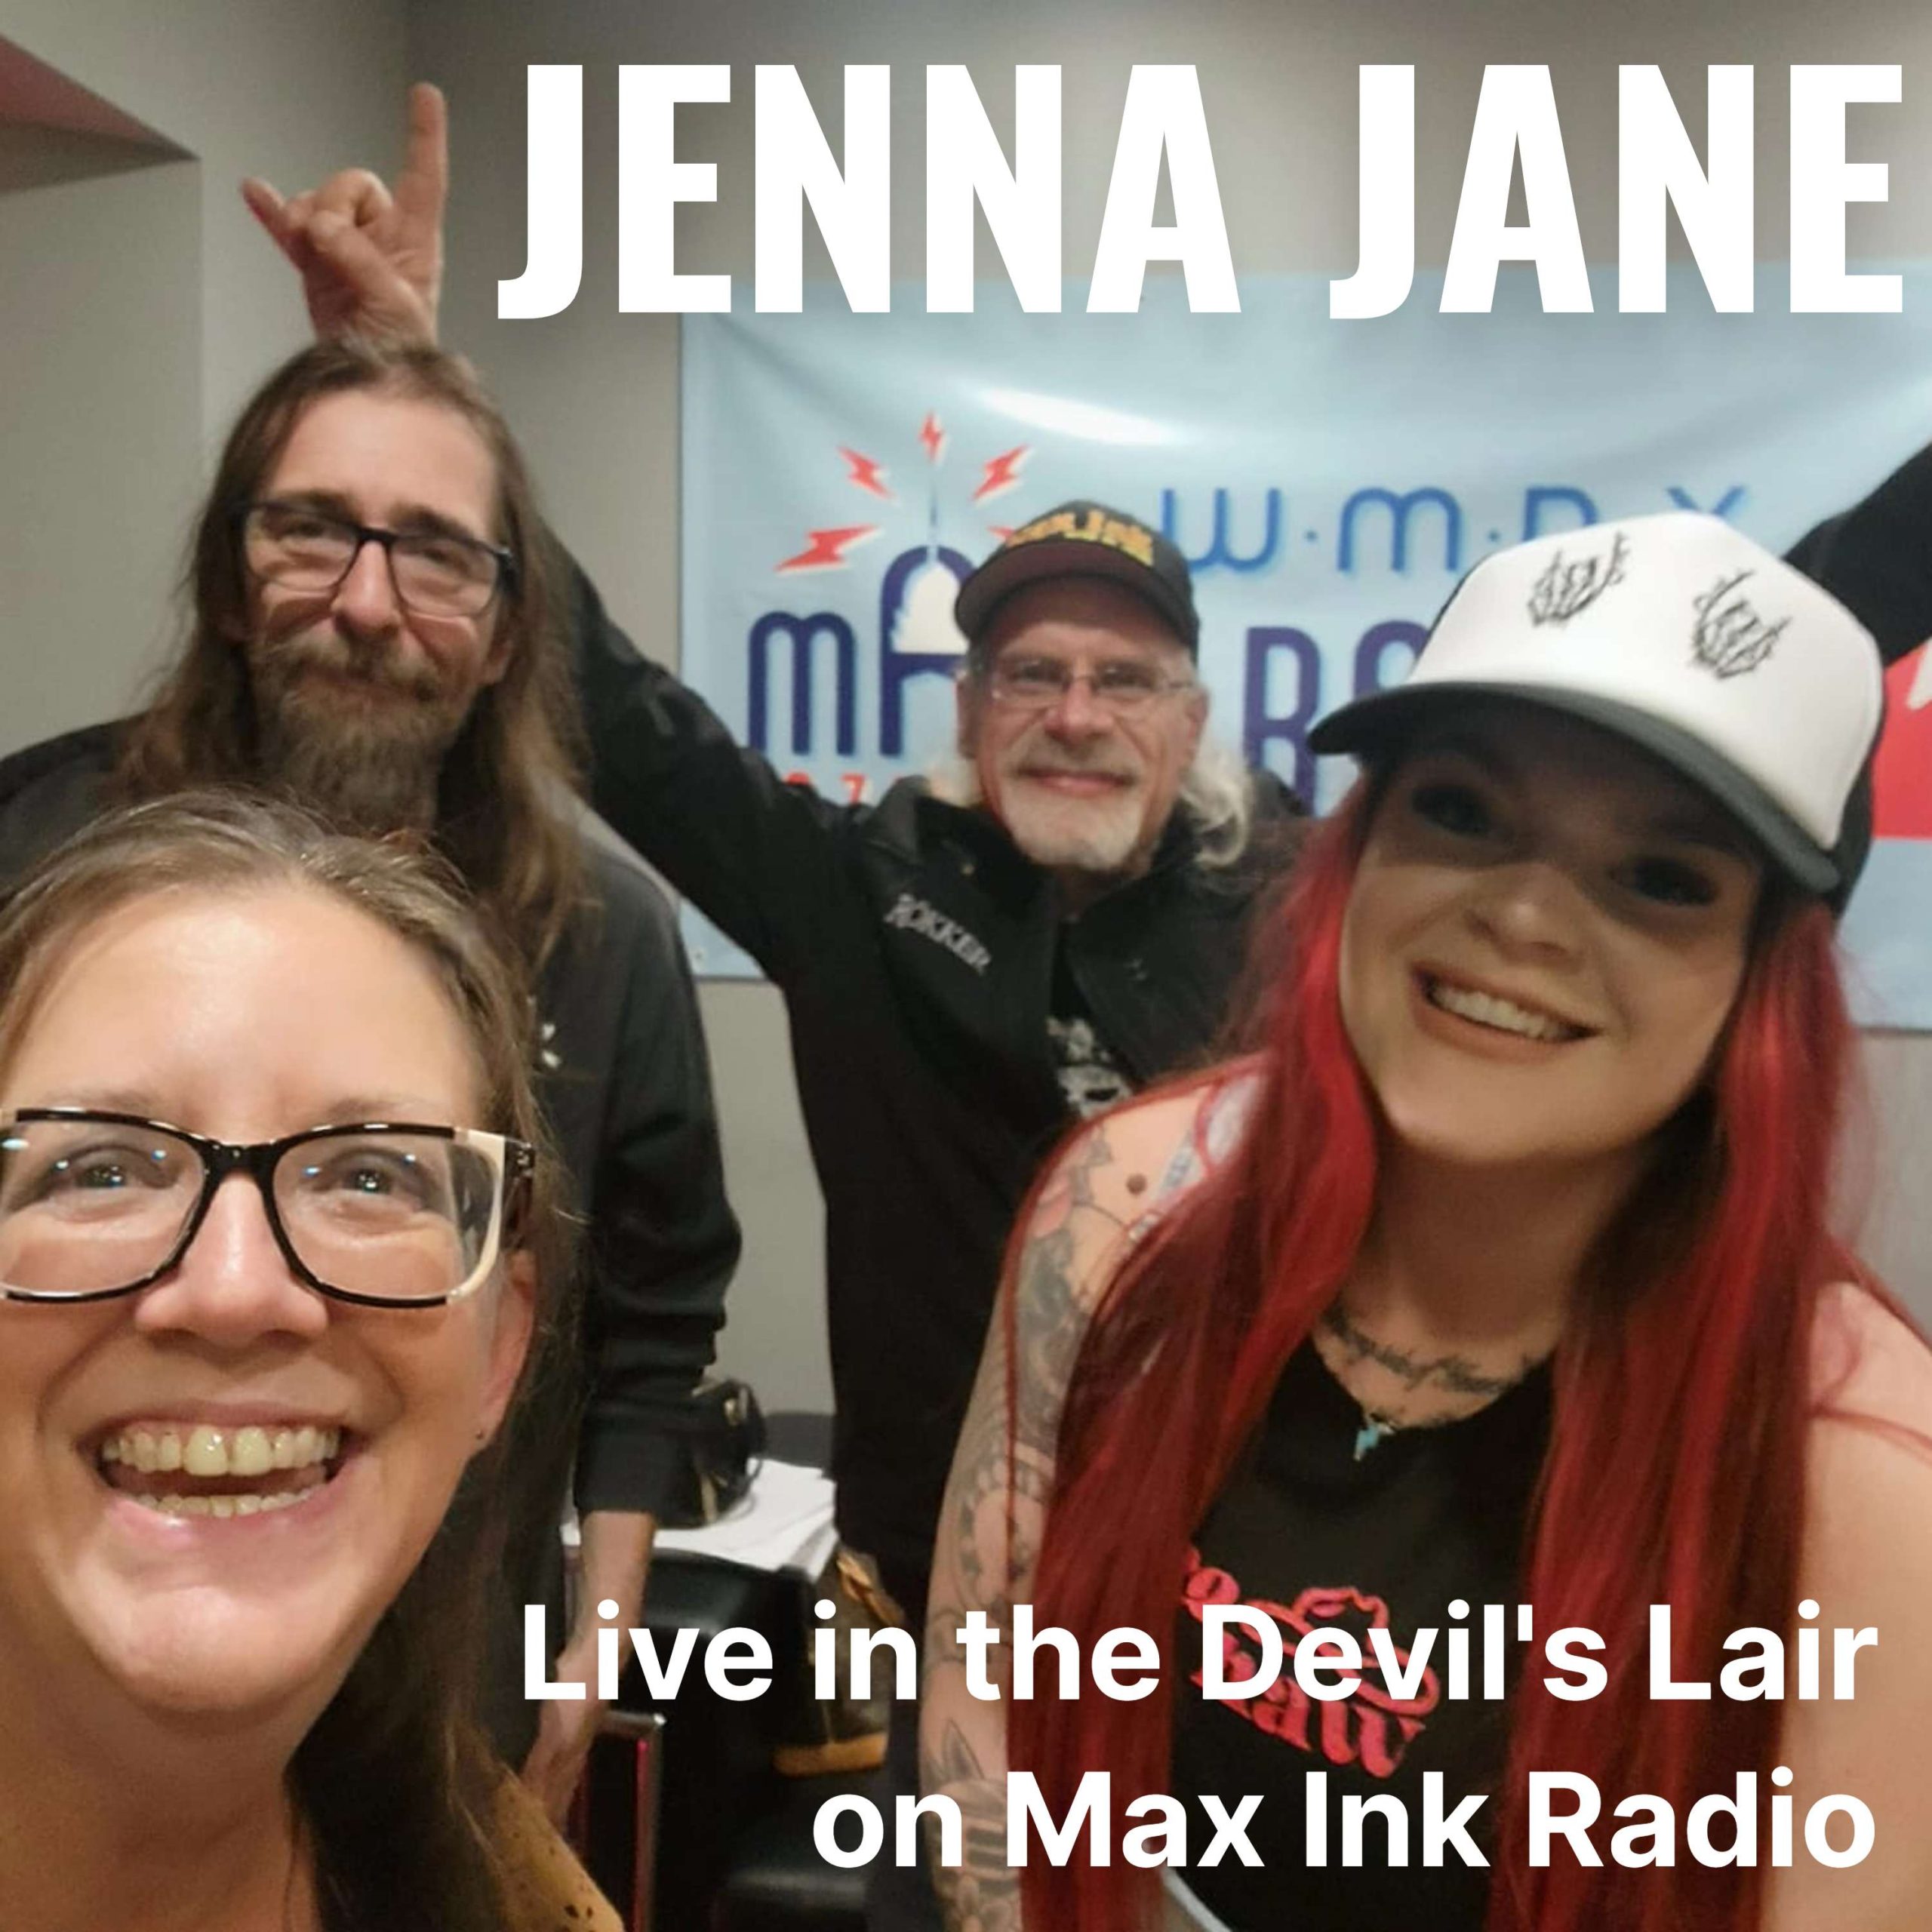 Max Ink Radio crew with Jenna Jane